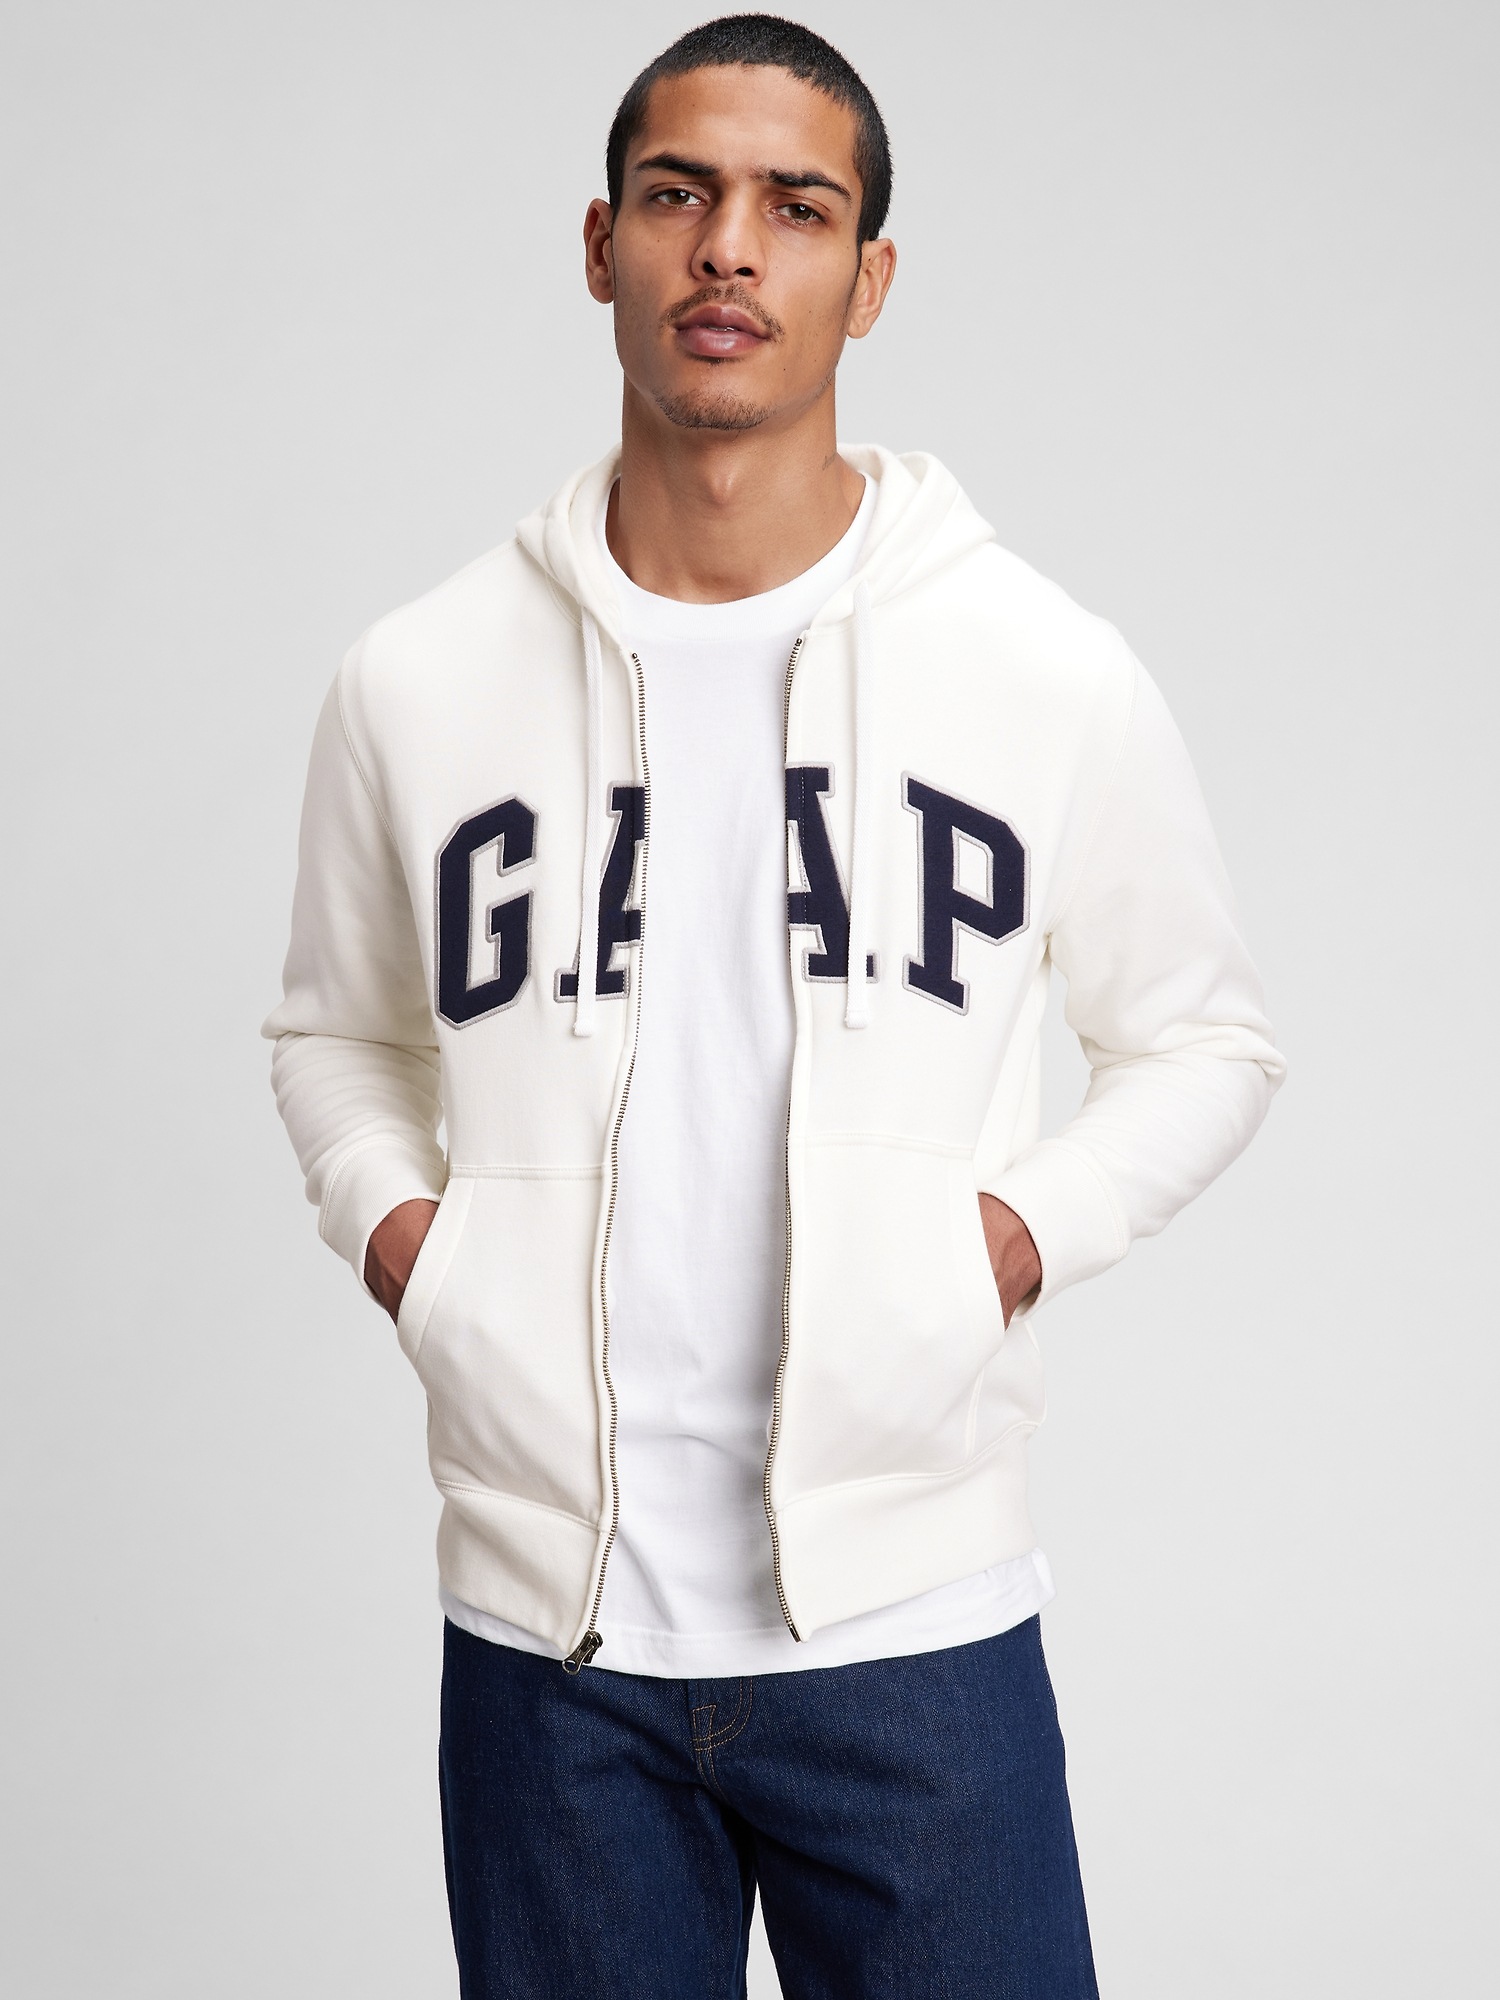 gap logo hoodie canada - Elton Samson